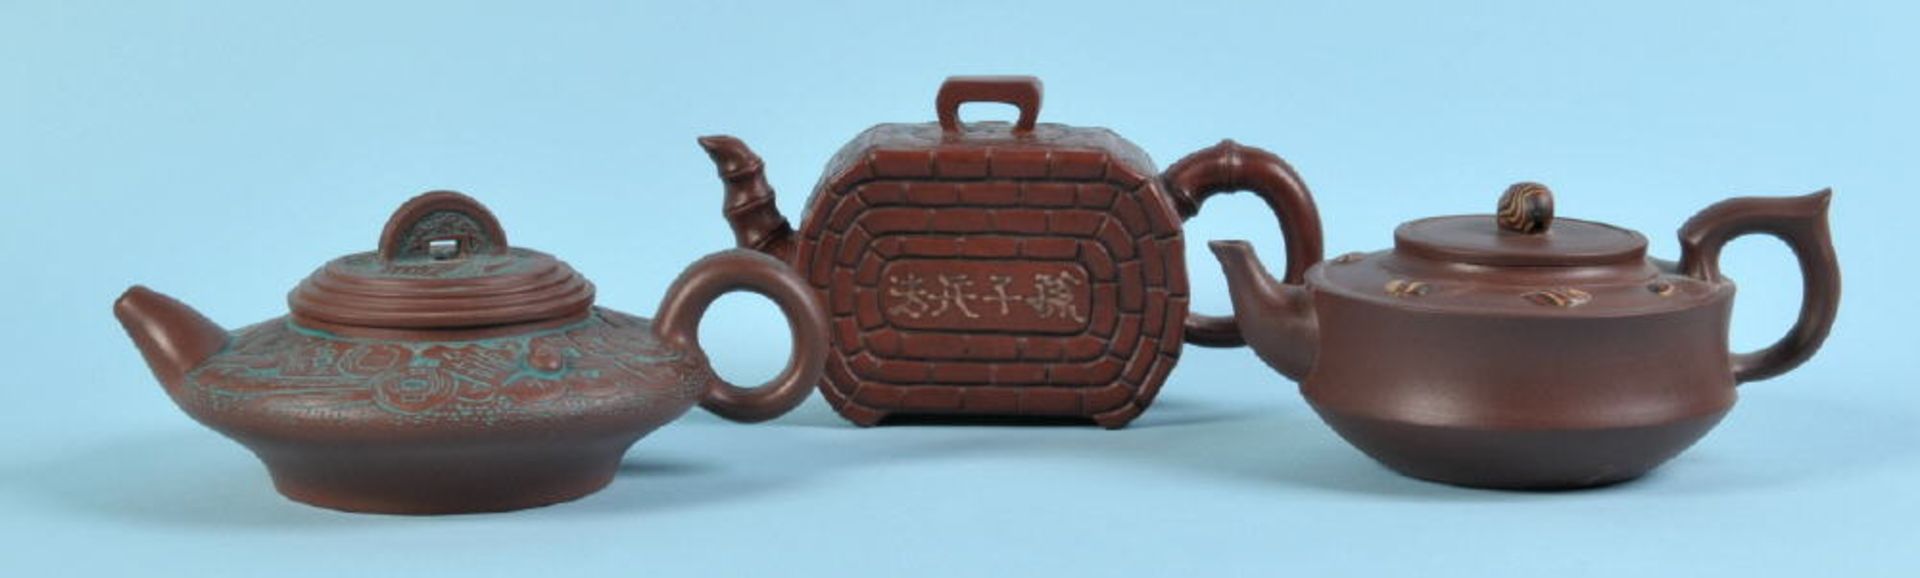 Teekännchen, 3 Stückbrauner Yixing-Ton, versch. Formen u. strukturierte Dekors, H= 7-9 cm, China